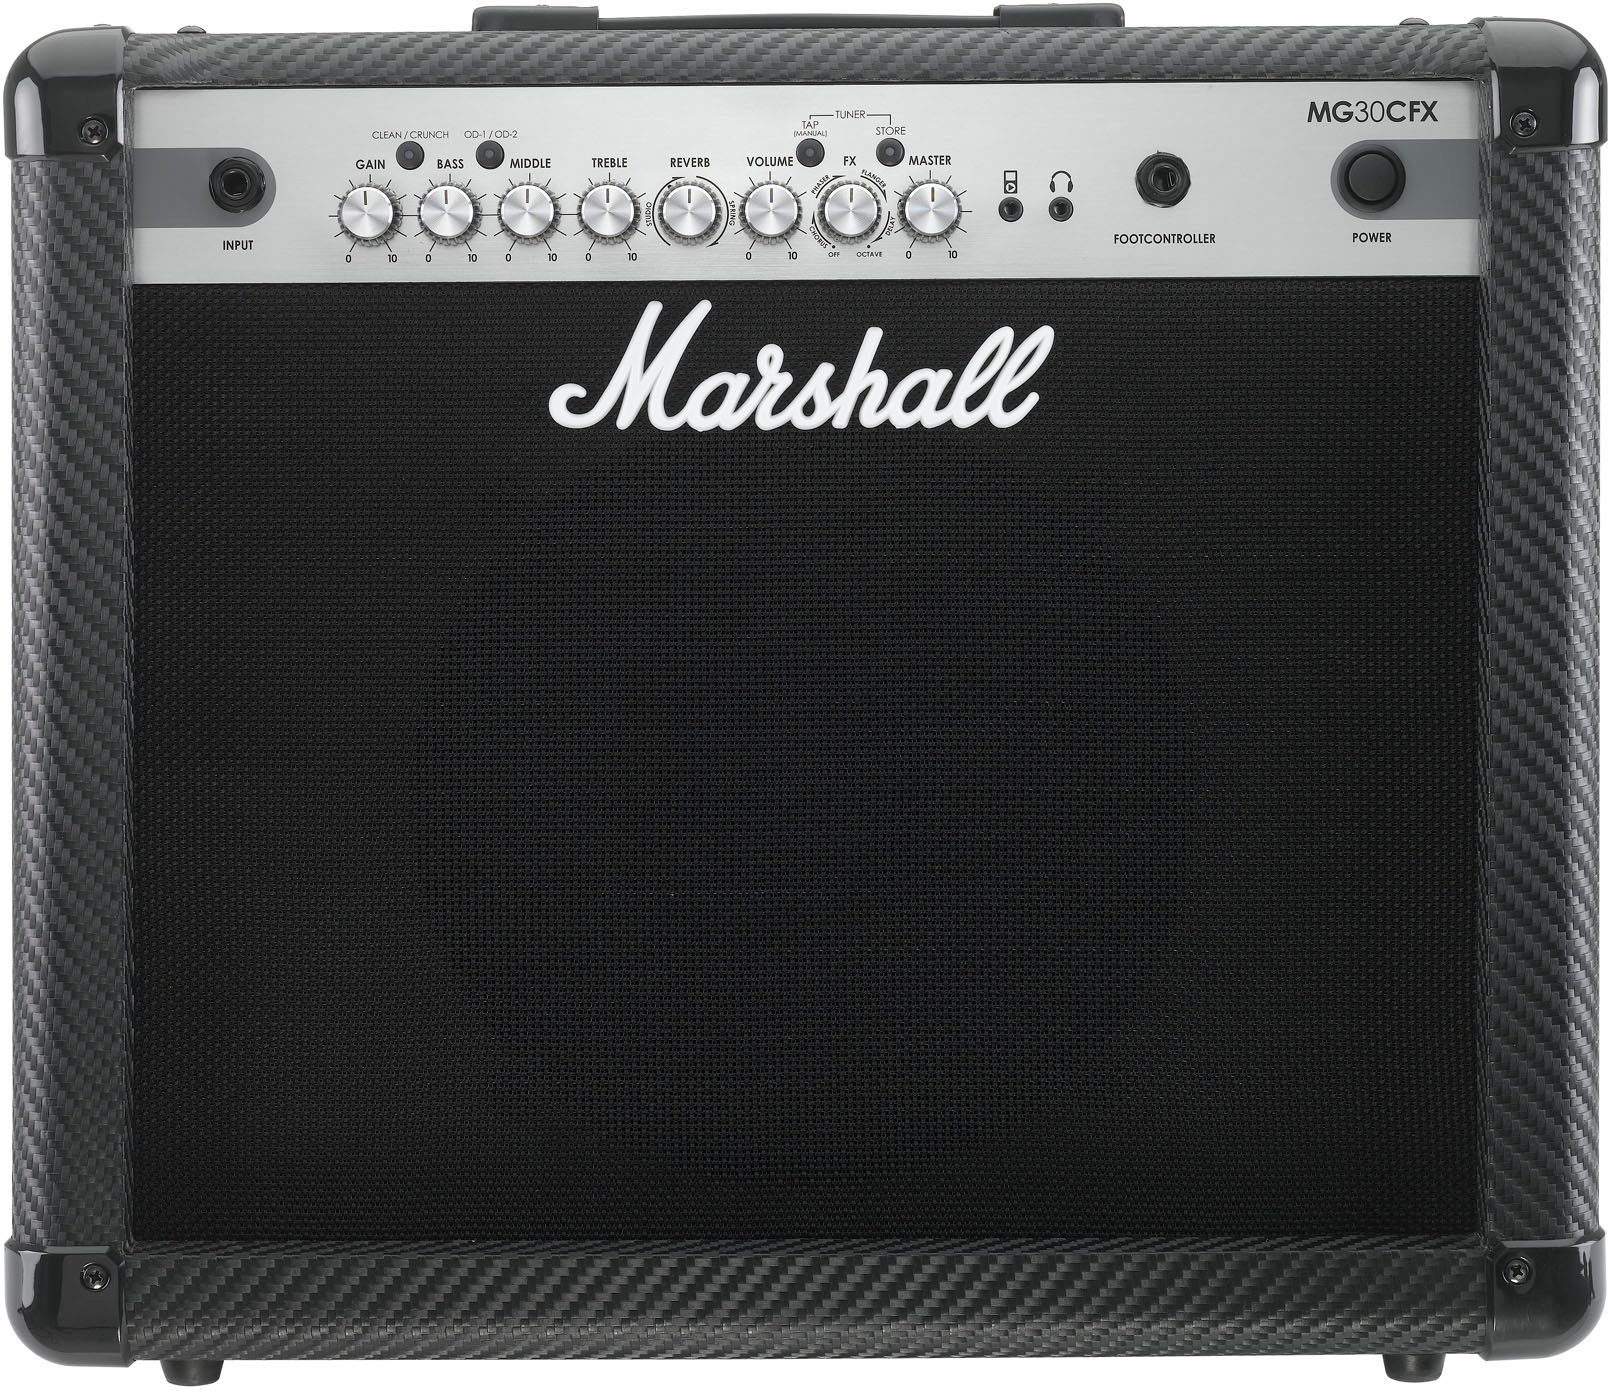 Marshall MG30CFX Carbon Fiber Guitar Combo Amplifier (30 Watts, 1x10